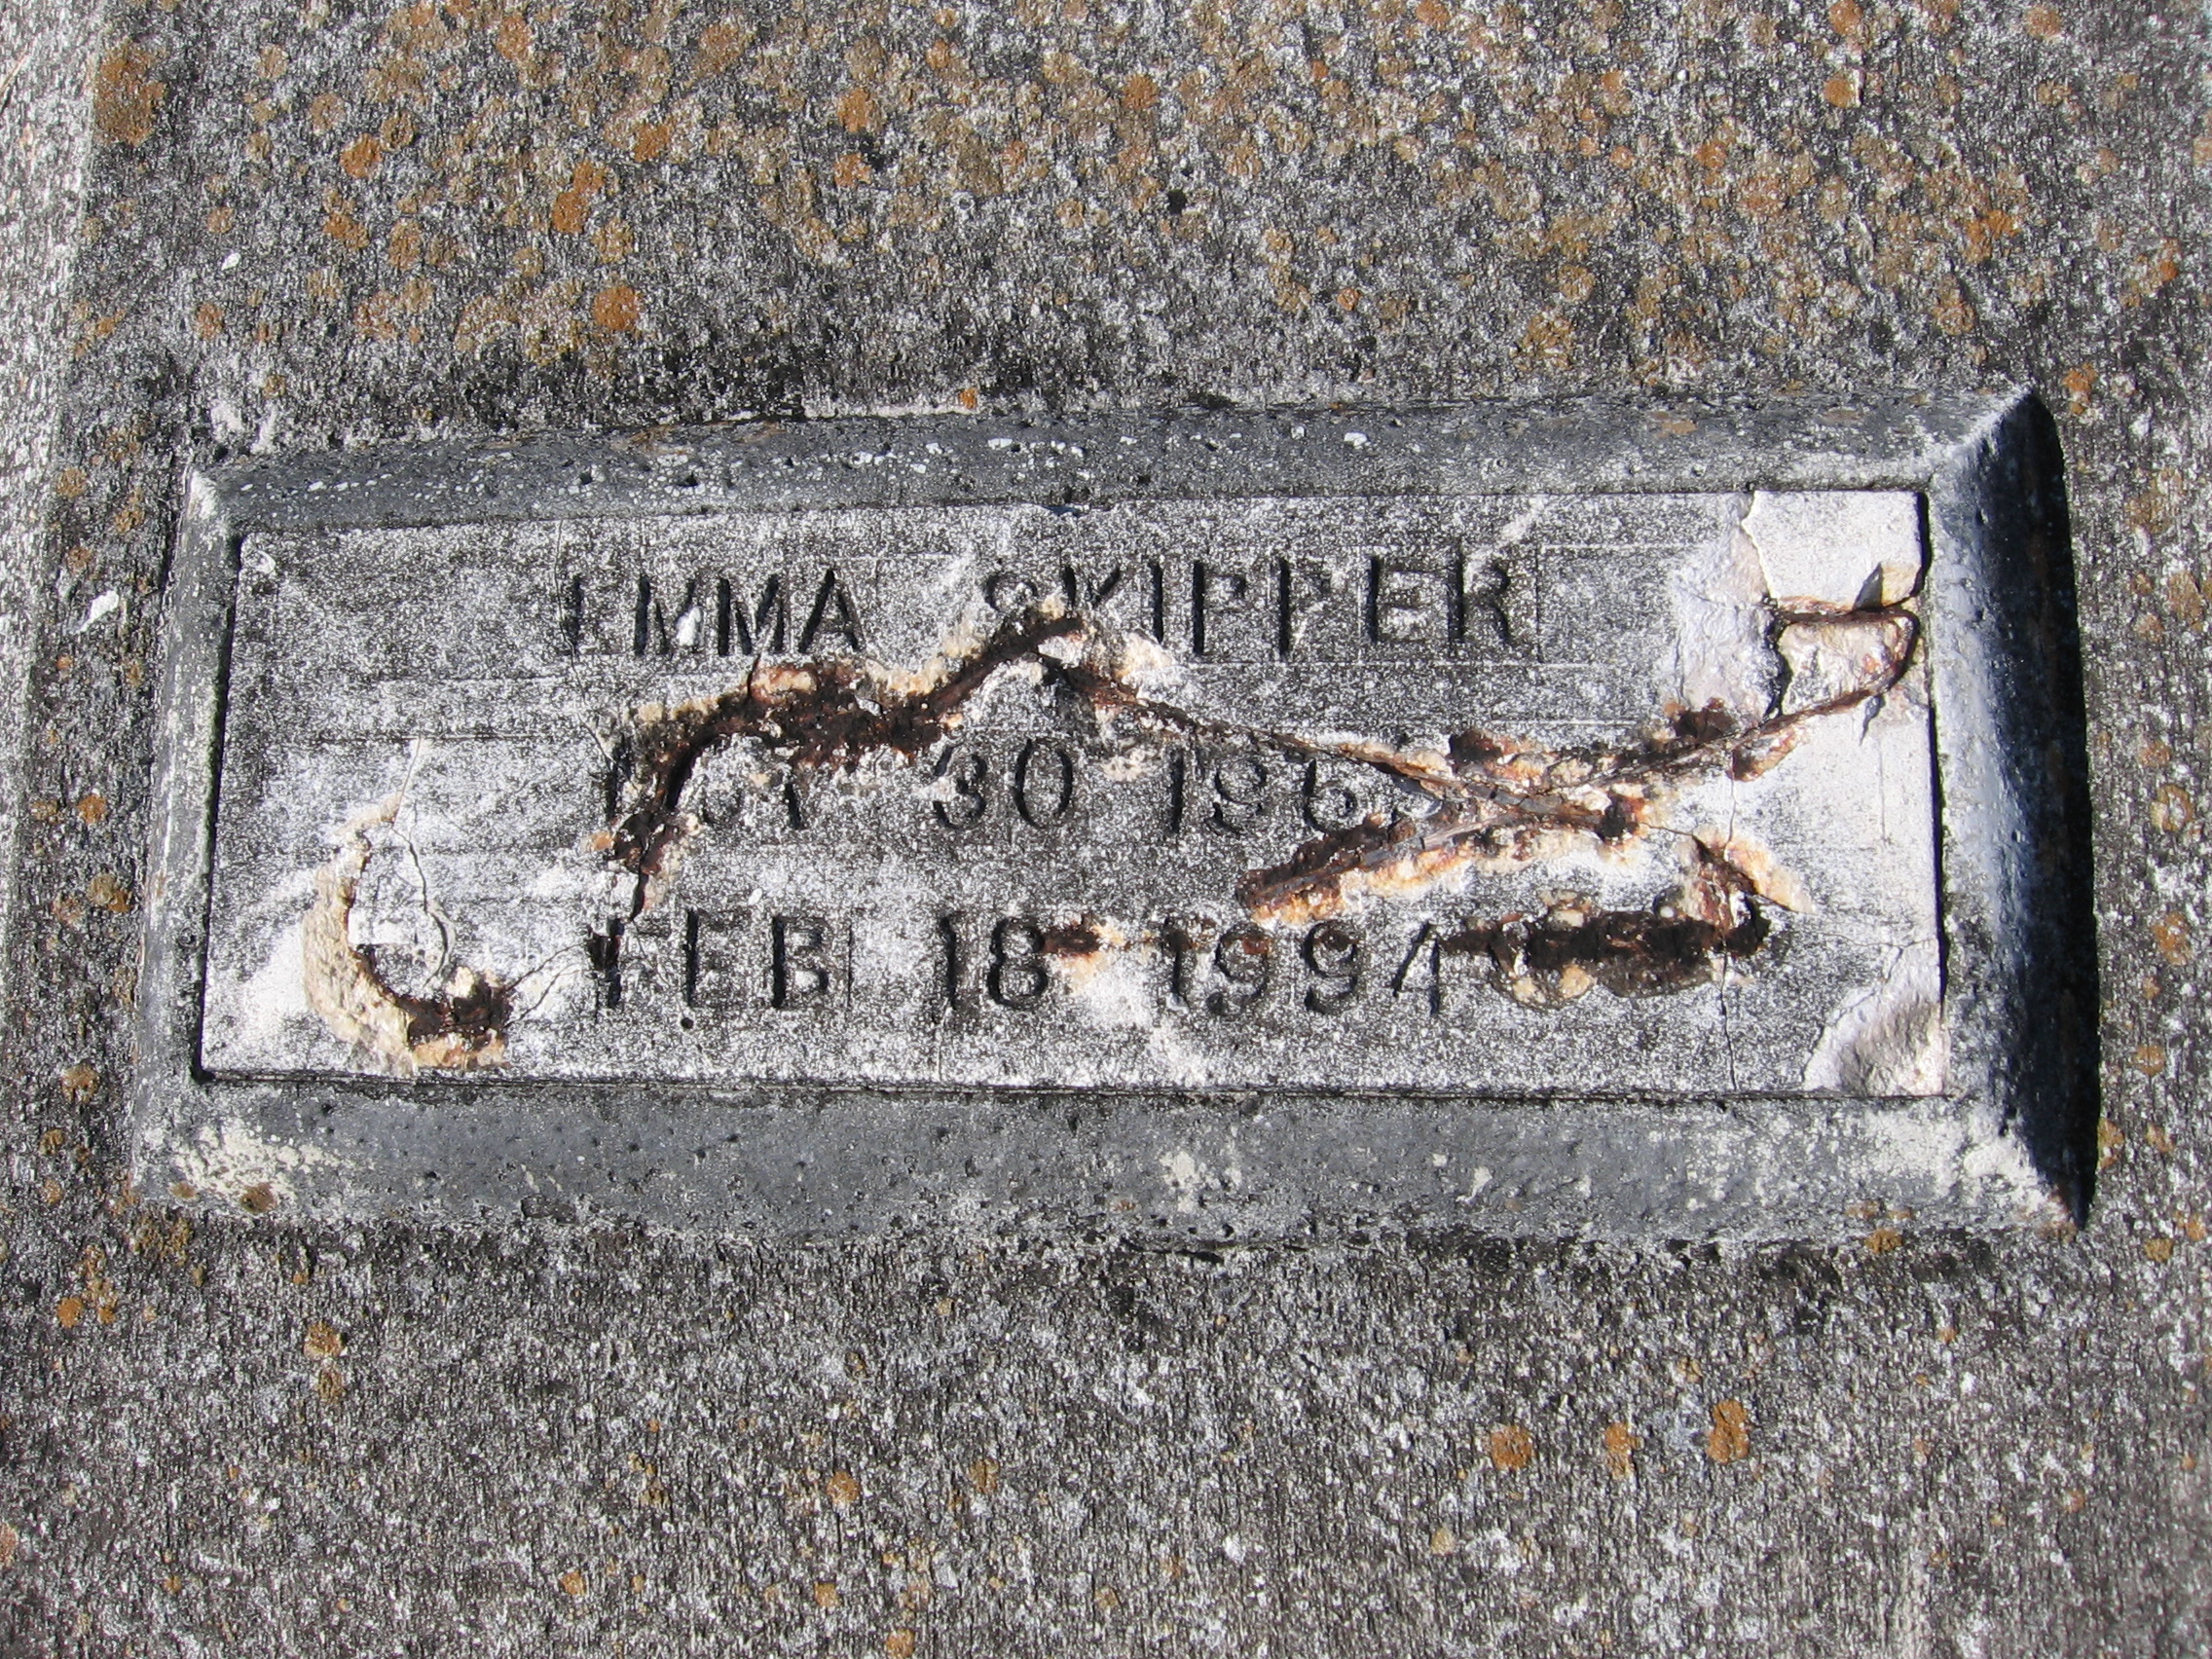 Emma Skipper